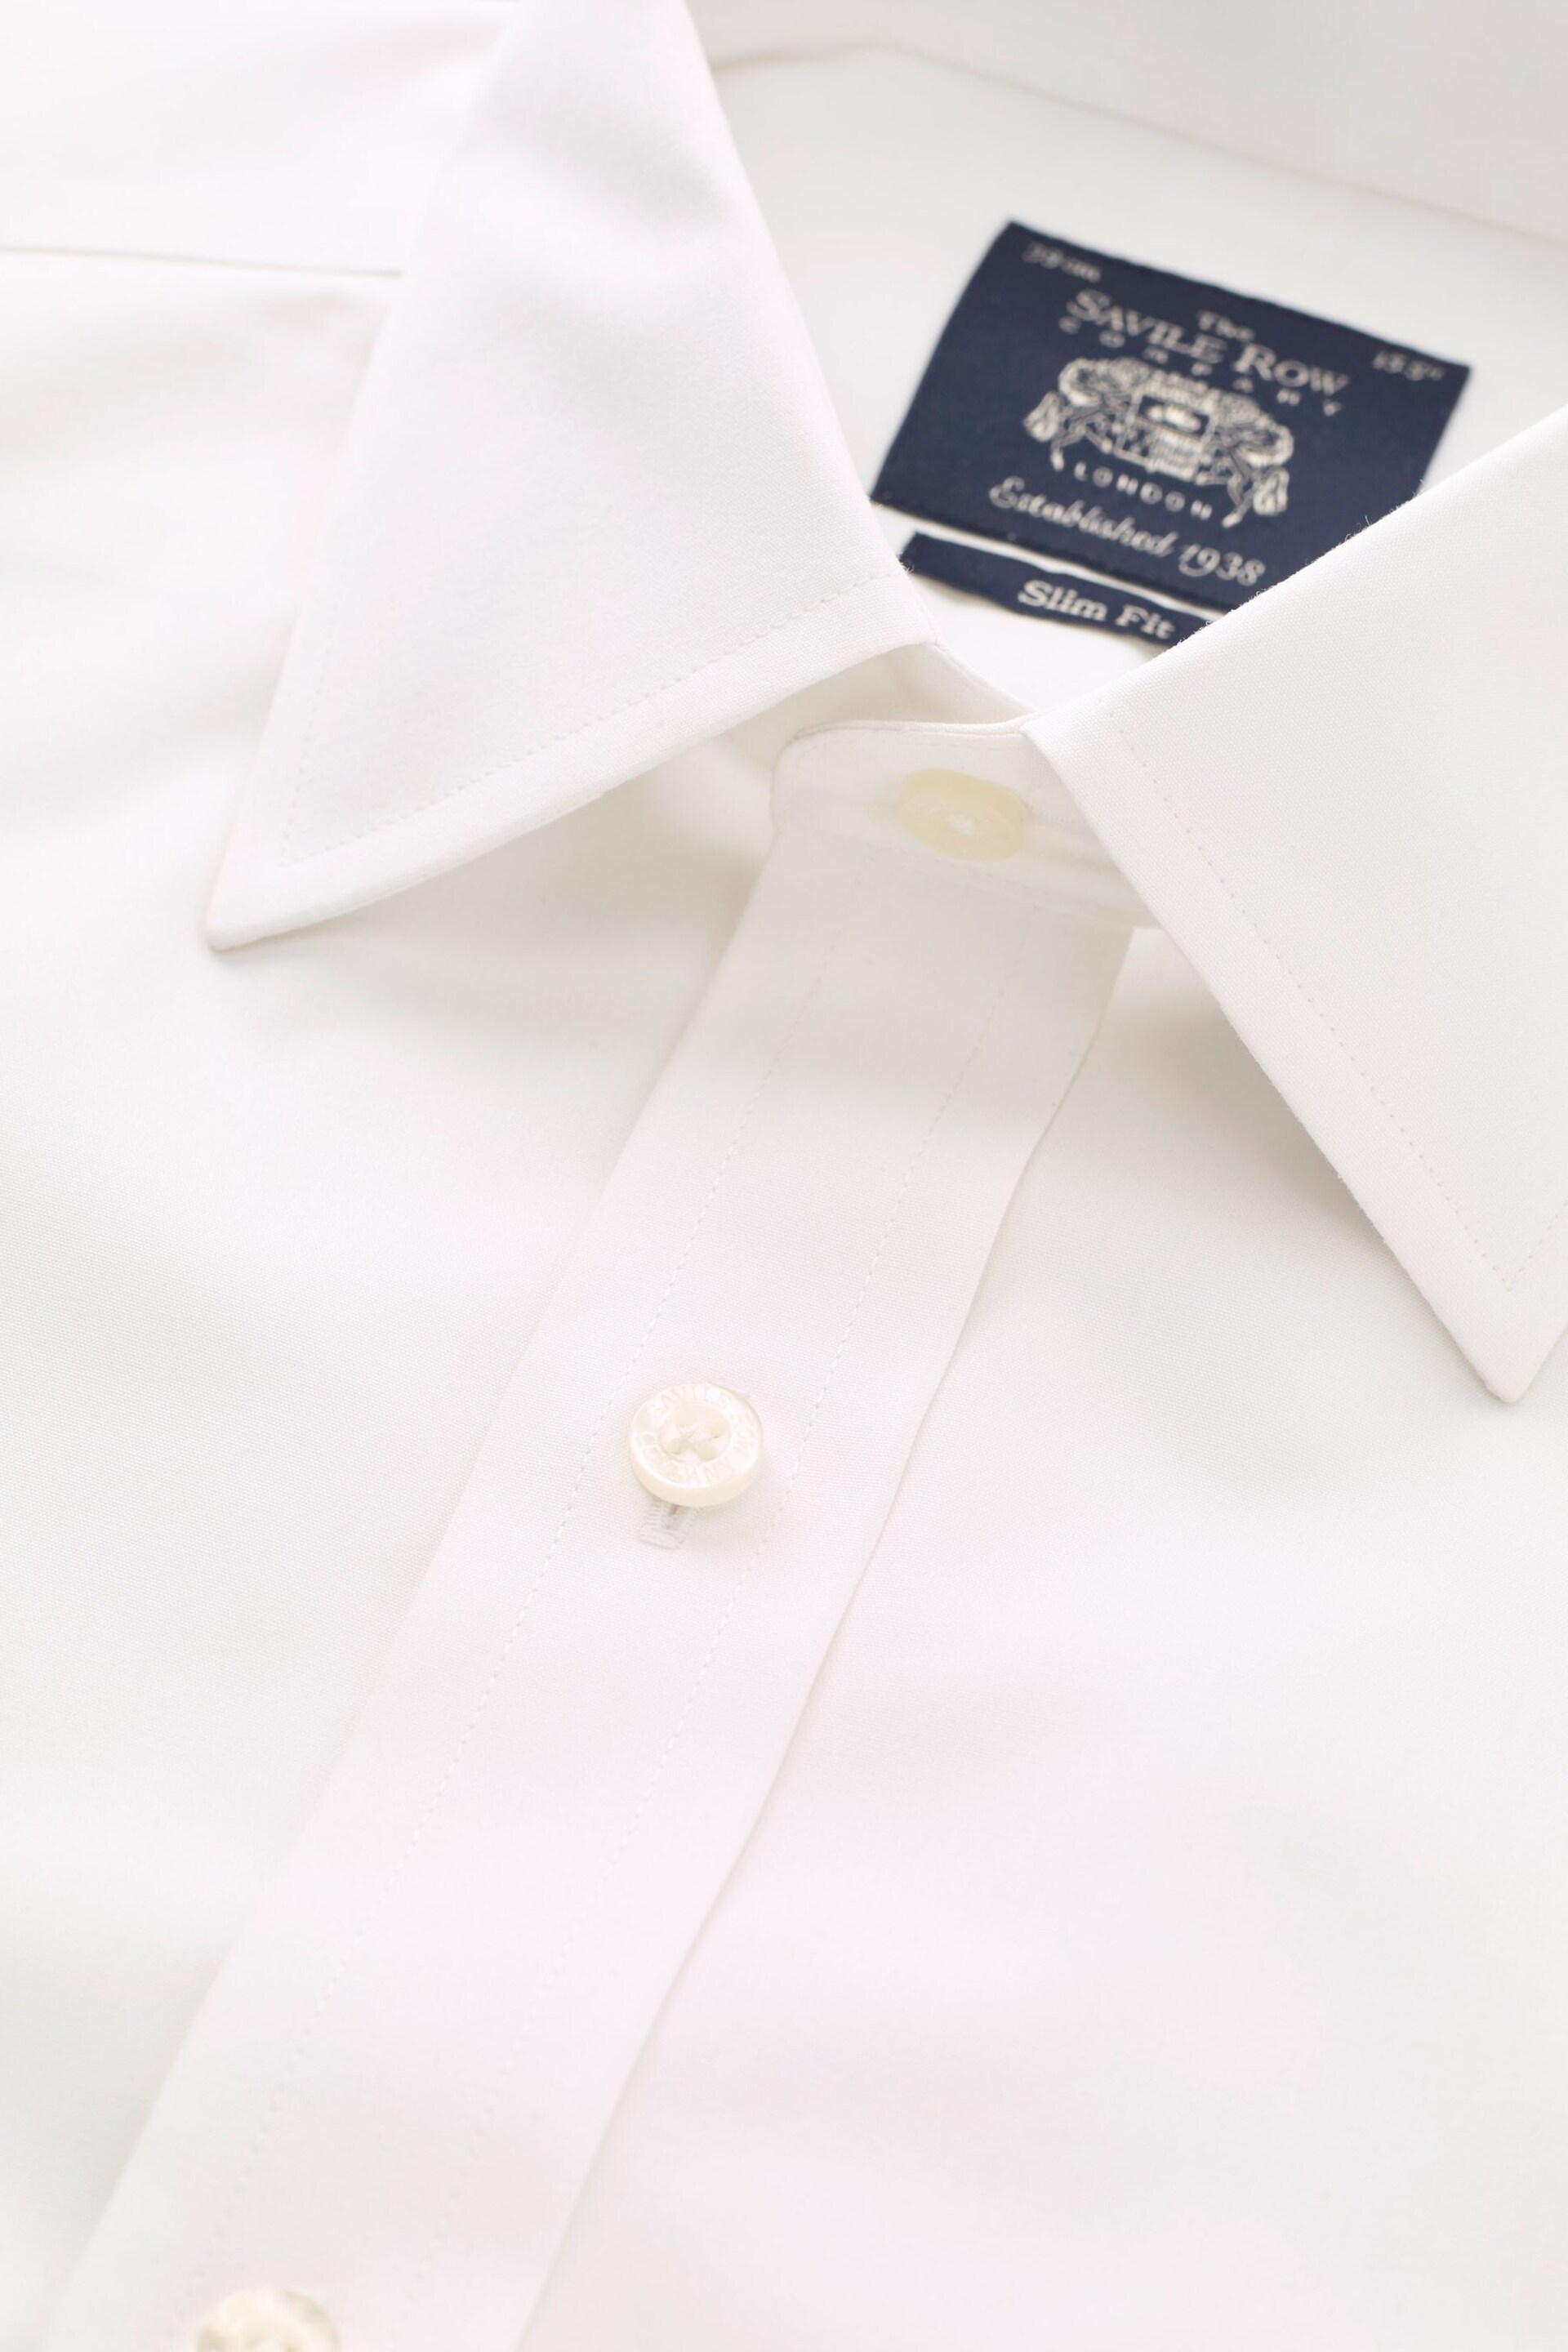 Savile Row White Poplin Slim Fit NonIron Double Cuff Shirt - Image 3 of 4